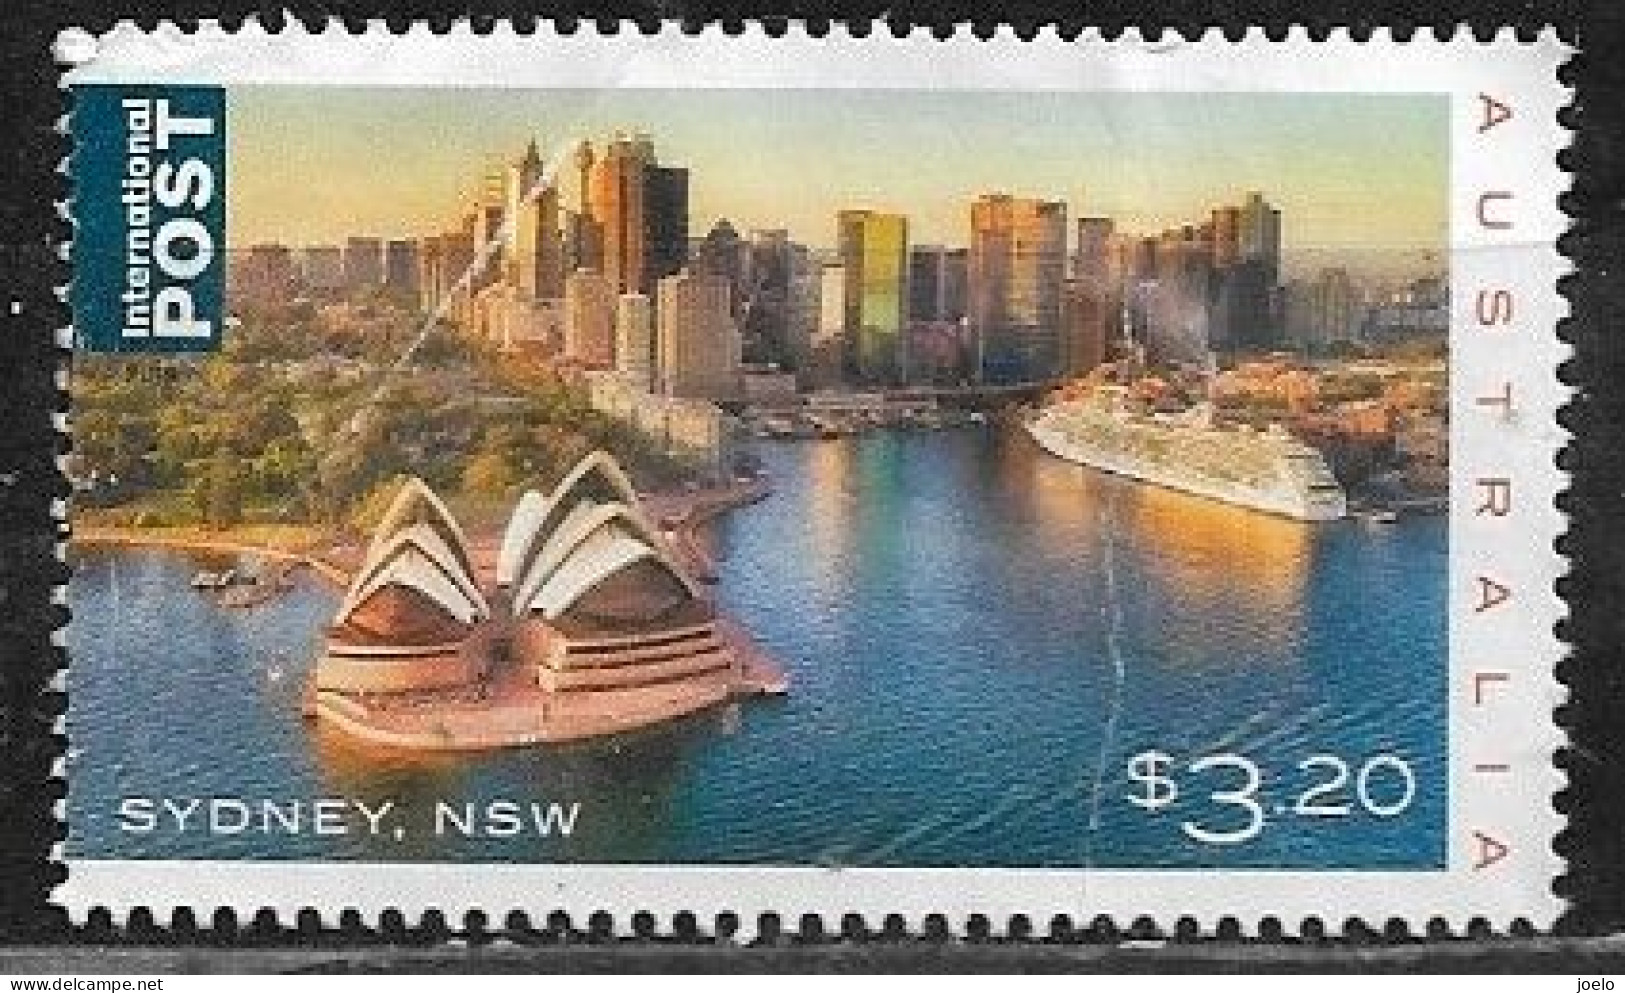 AUSTRALIA 2019 SYDNEY NSW $3.20 - Used Stamps